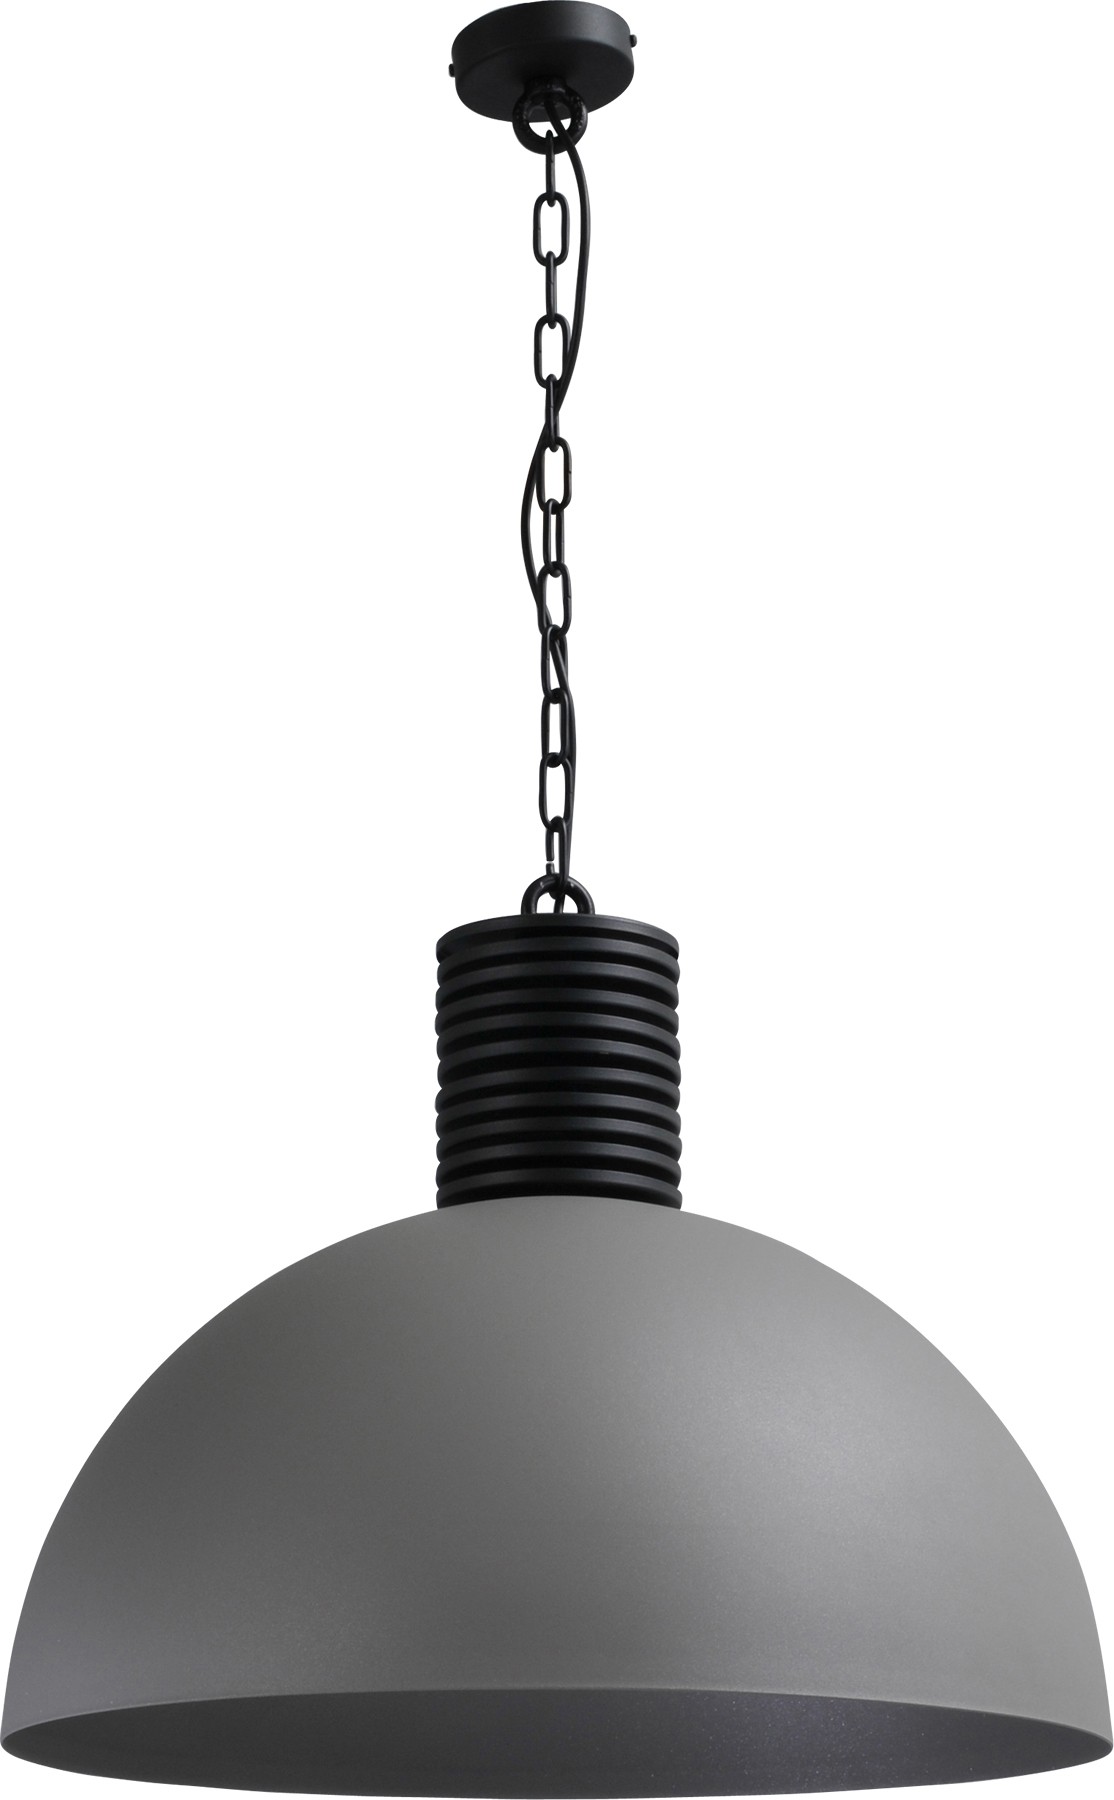 Pendelleuchte grau-schwarz, Beton-look, Industrielampe/ Retro-style, Ø: 60 cm